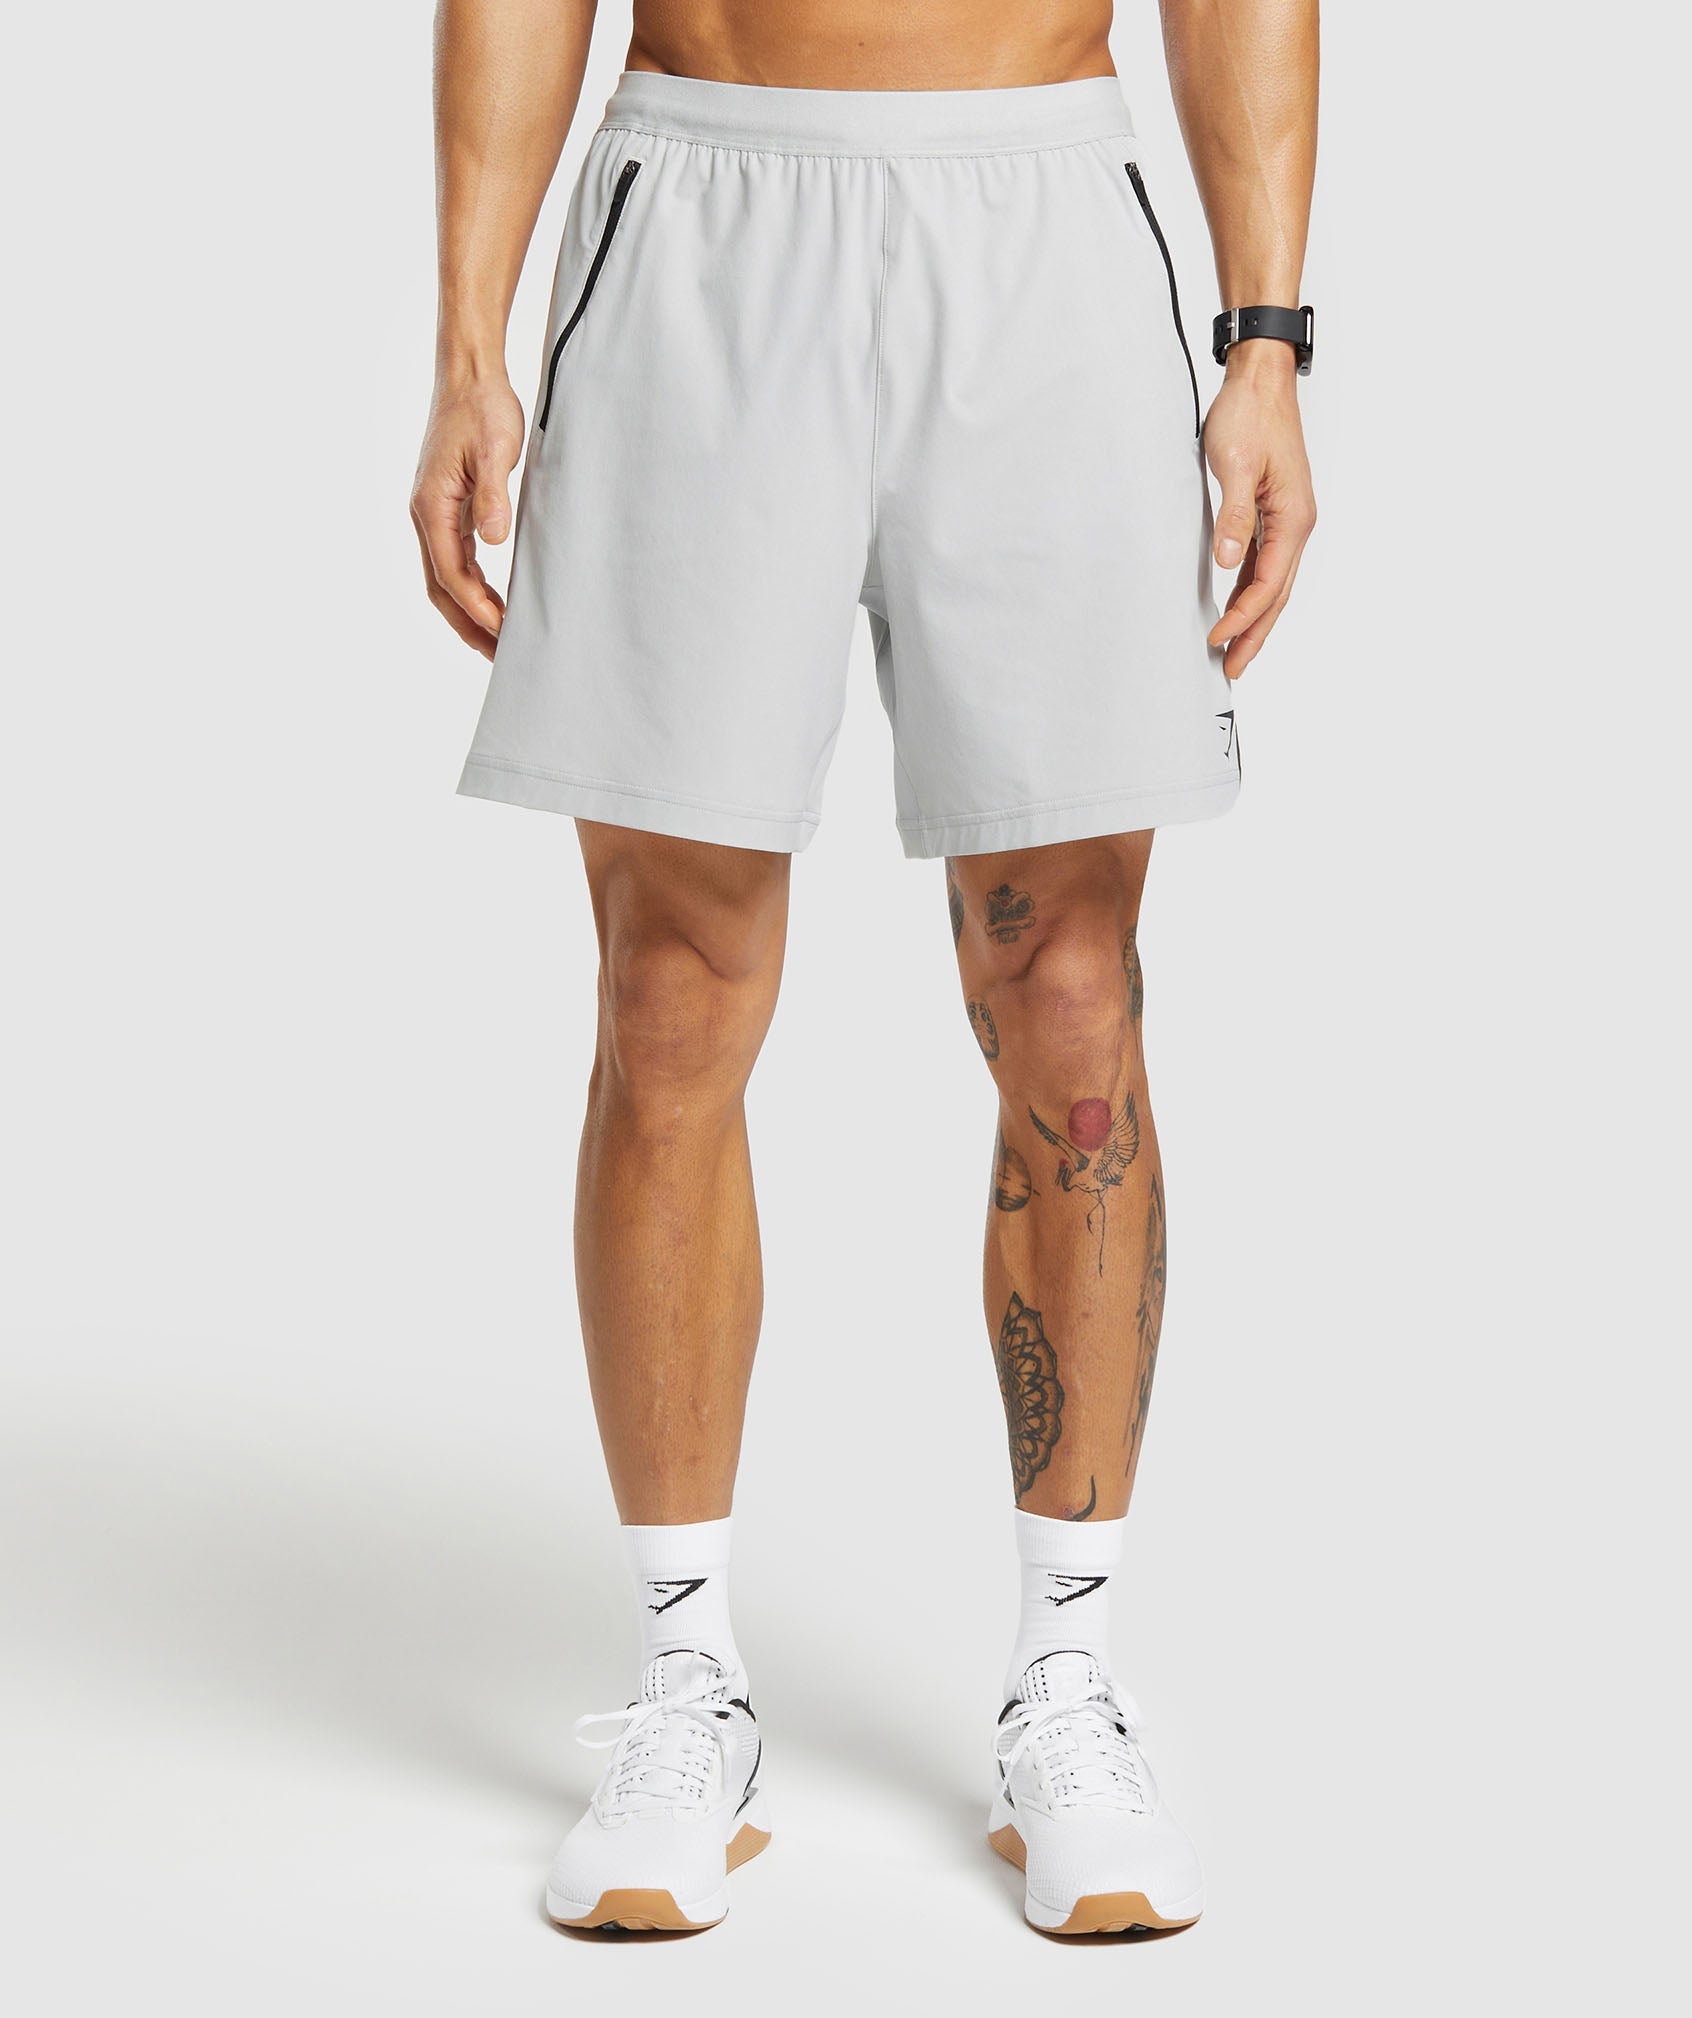 Apex 7" Hybrid Shorts in Light Grey